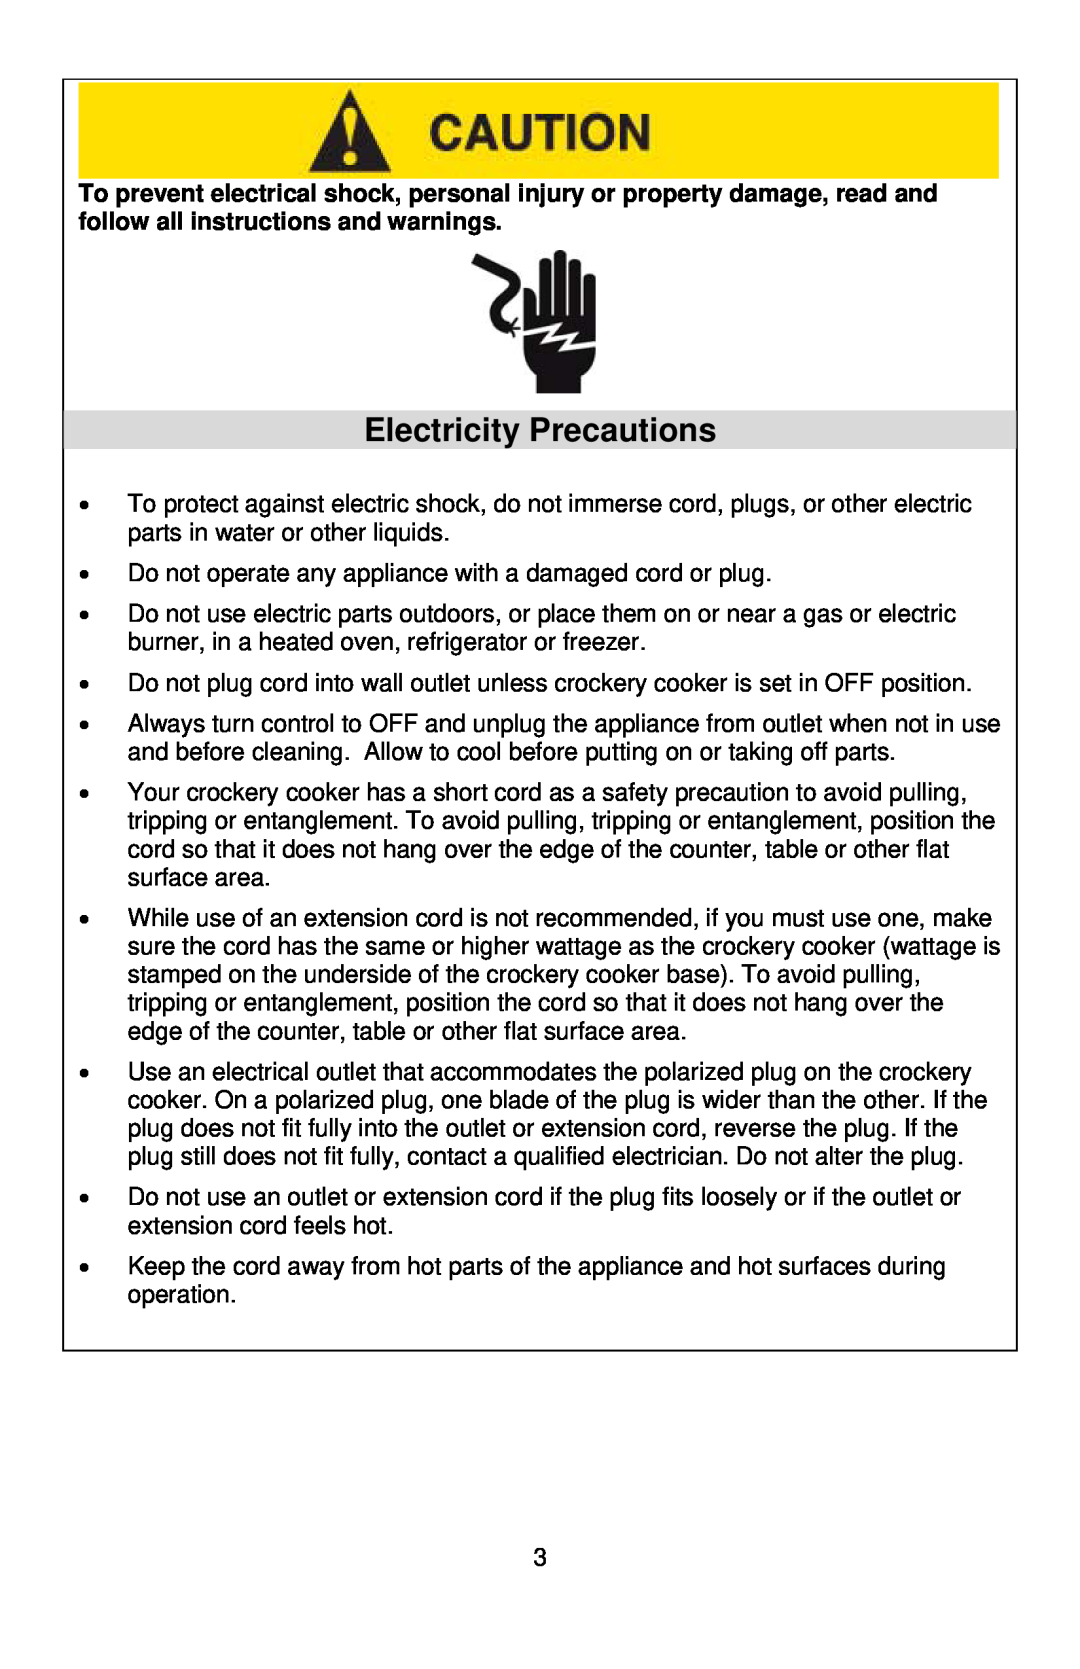 West Bend 5 6 Quart CrockeryTM Cooker instruction manual Electricity Precautions 